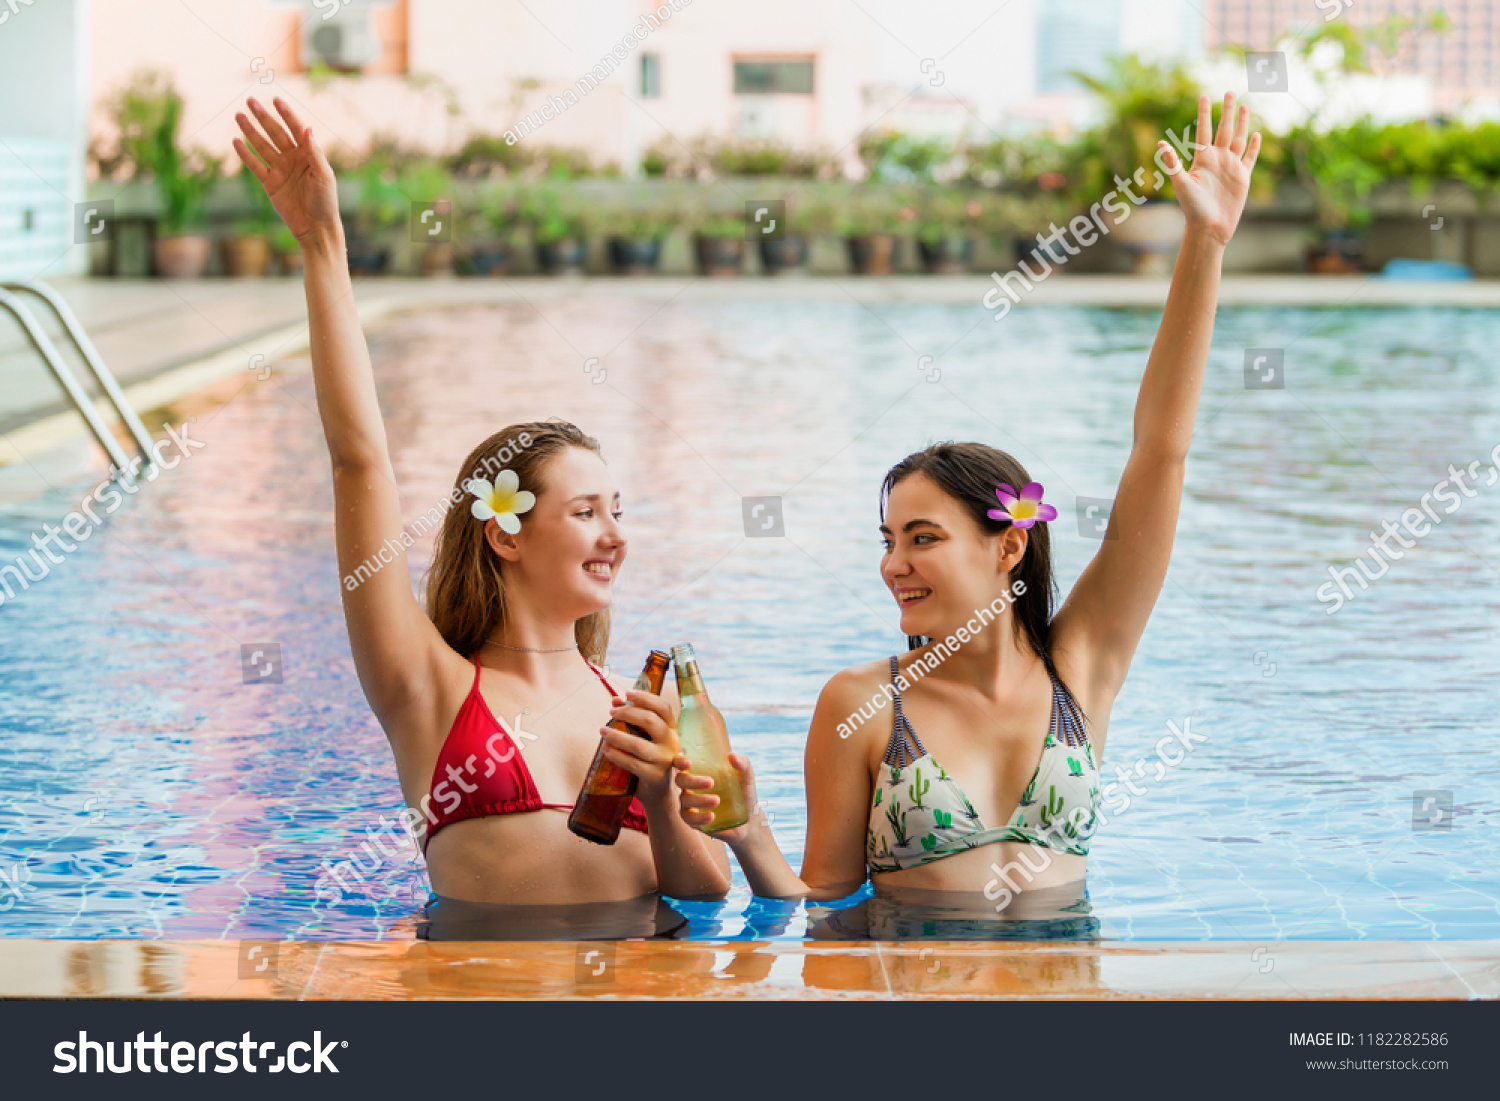 pool party girl selfie free photo